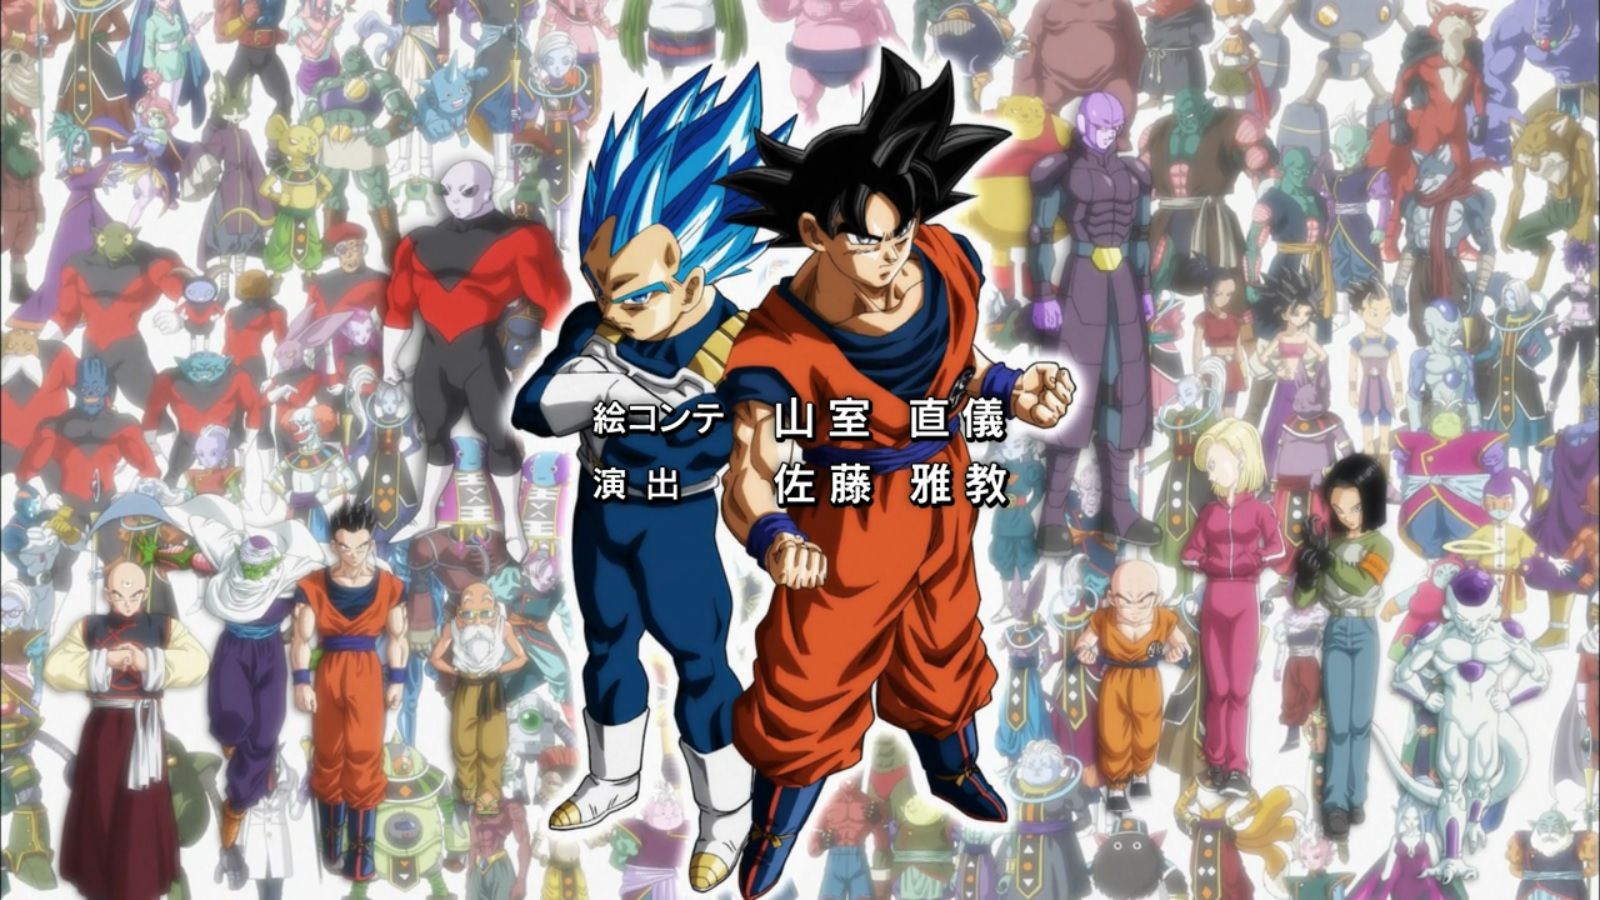 Dragon Ball Super A Miraculous Conclusion! Farewell, Goku! Until